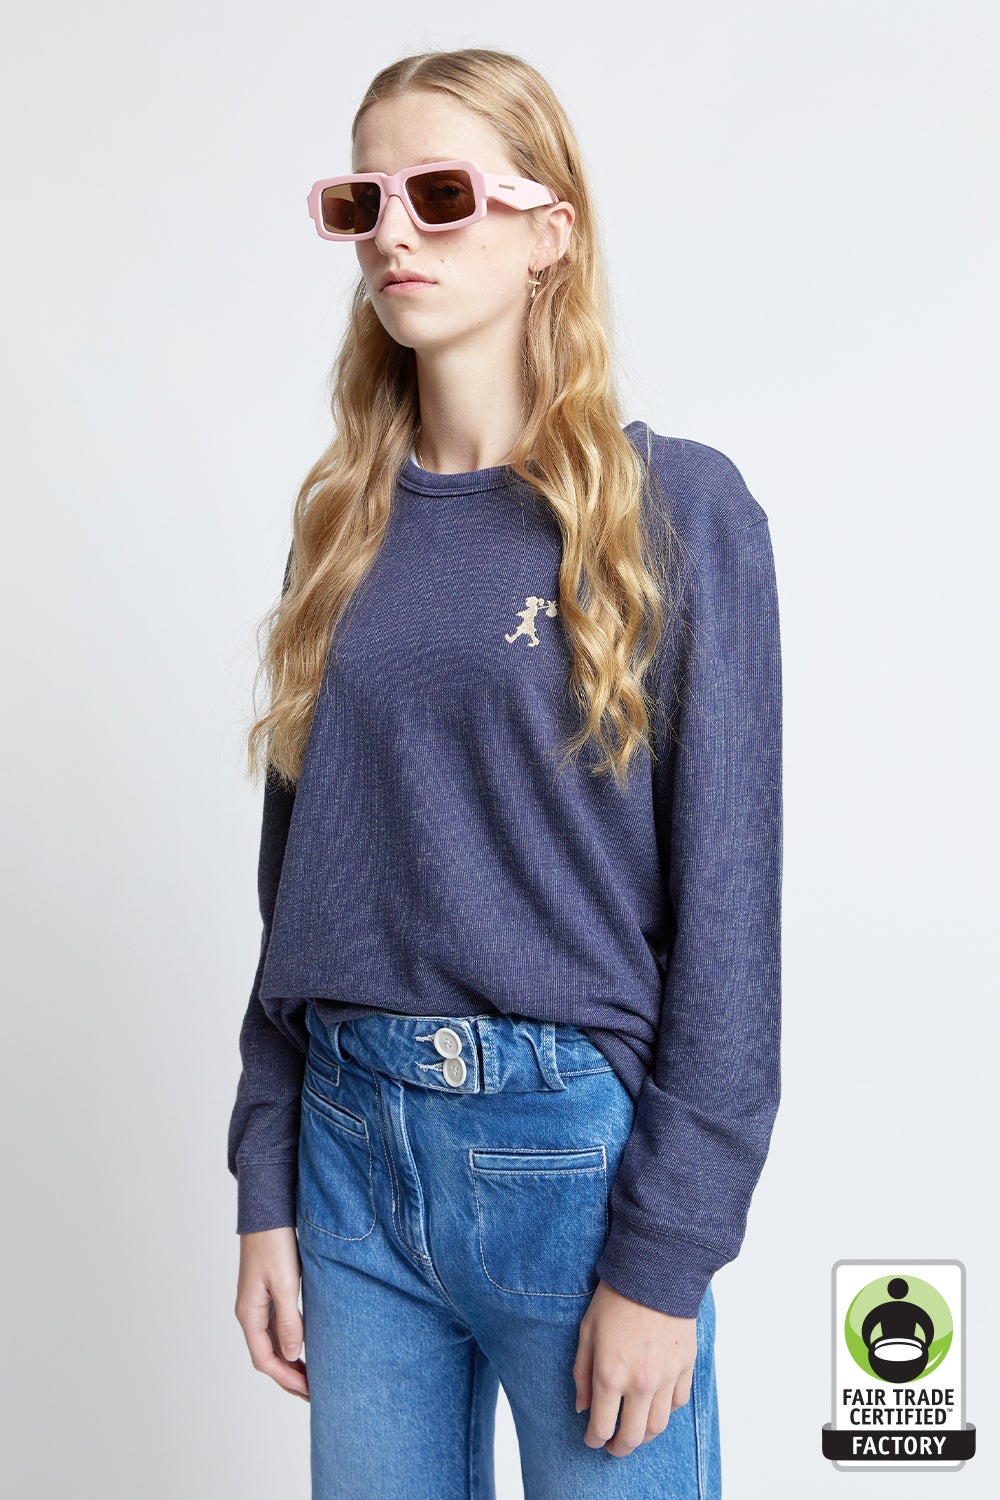 Embroidered Runaway Girl Organic Cotton Sweatshirt